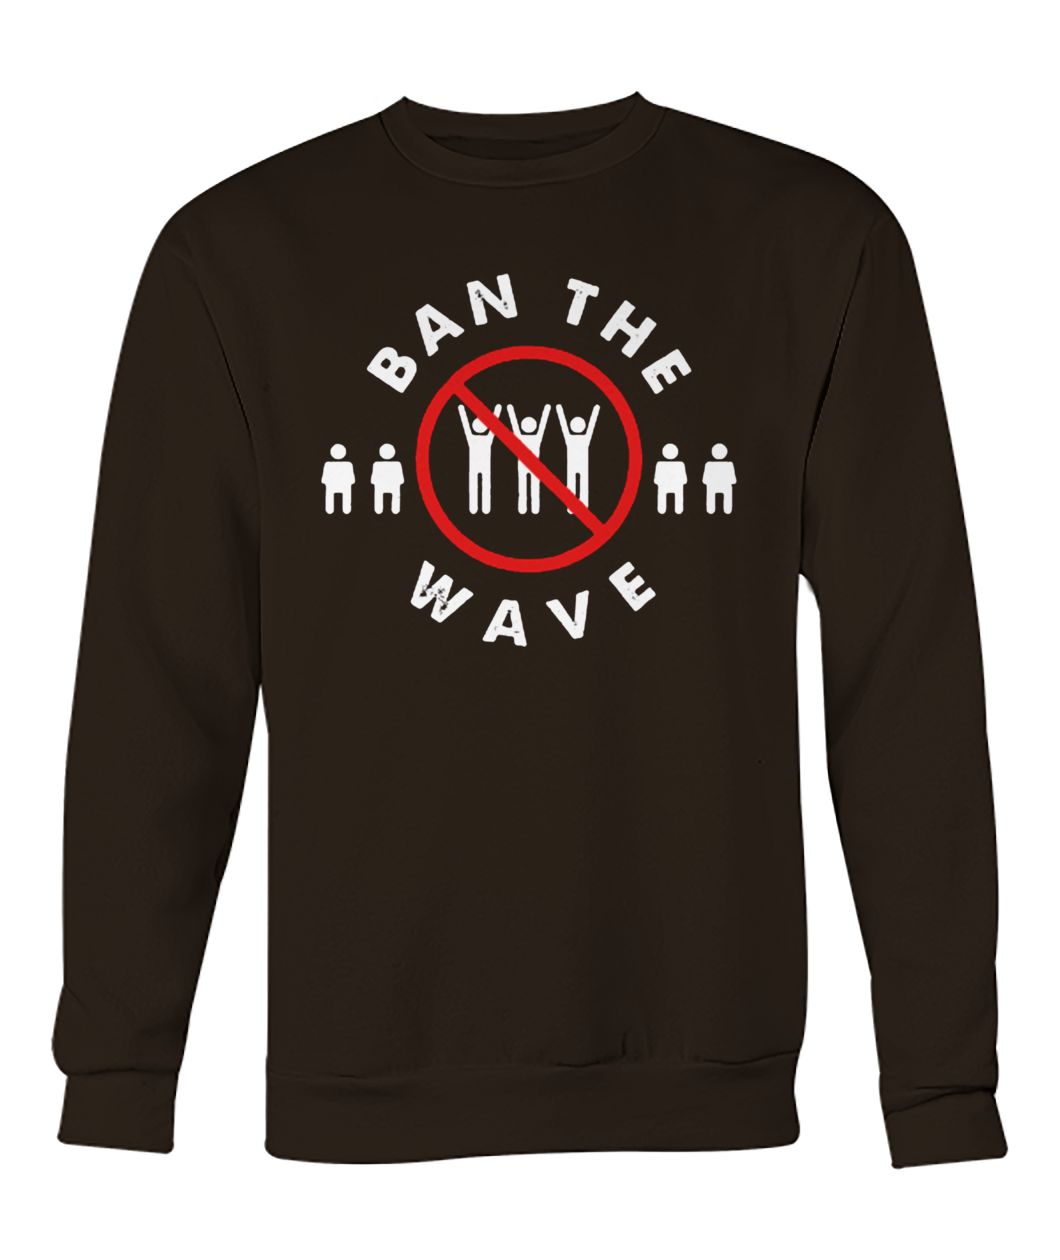 Ban the wave crew neck sweatshirt